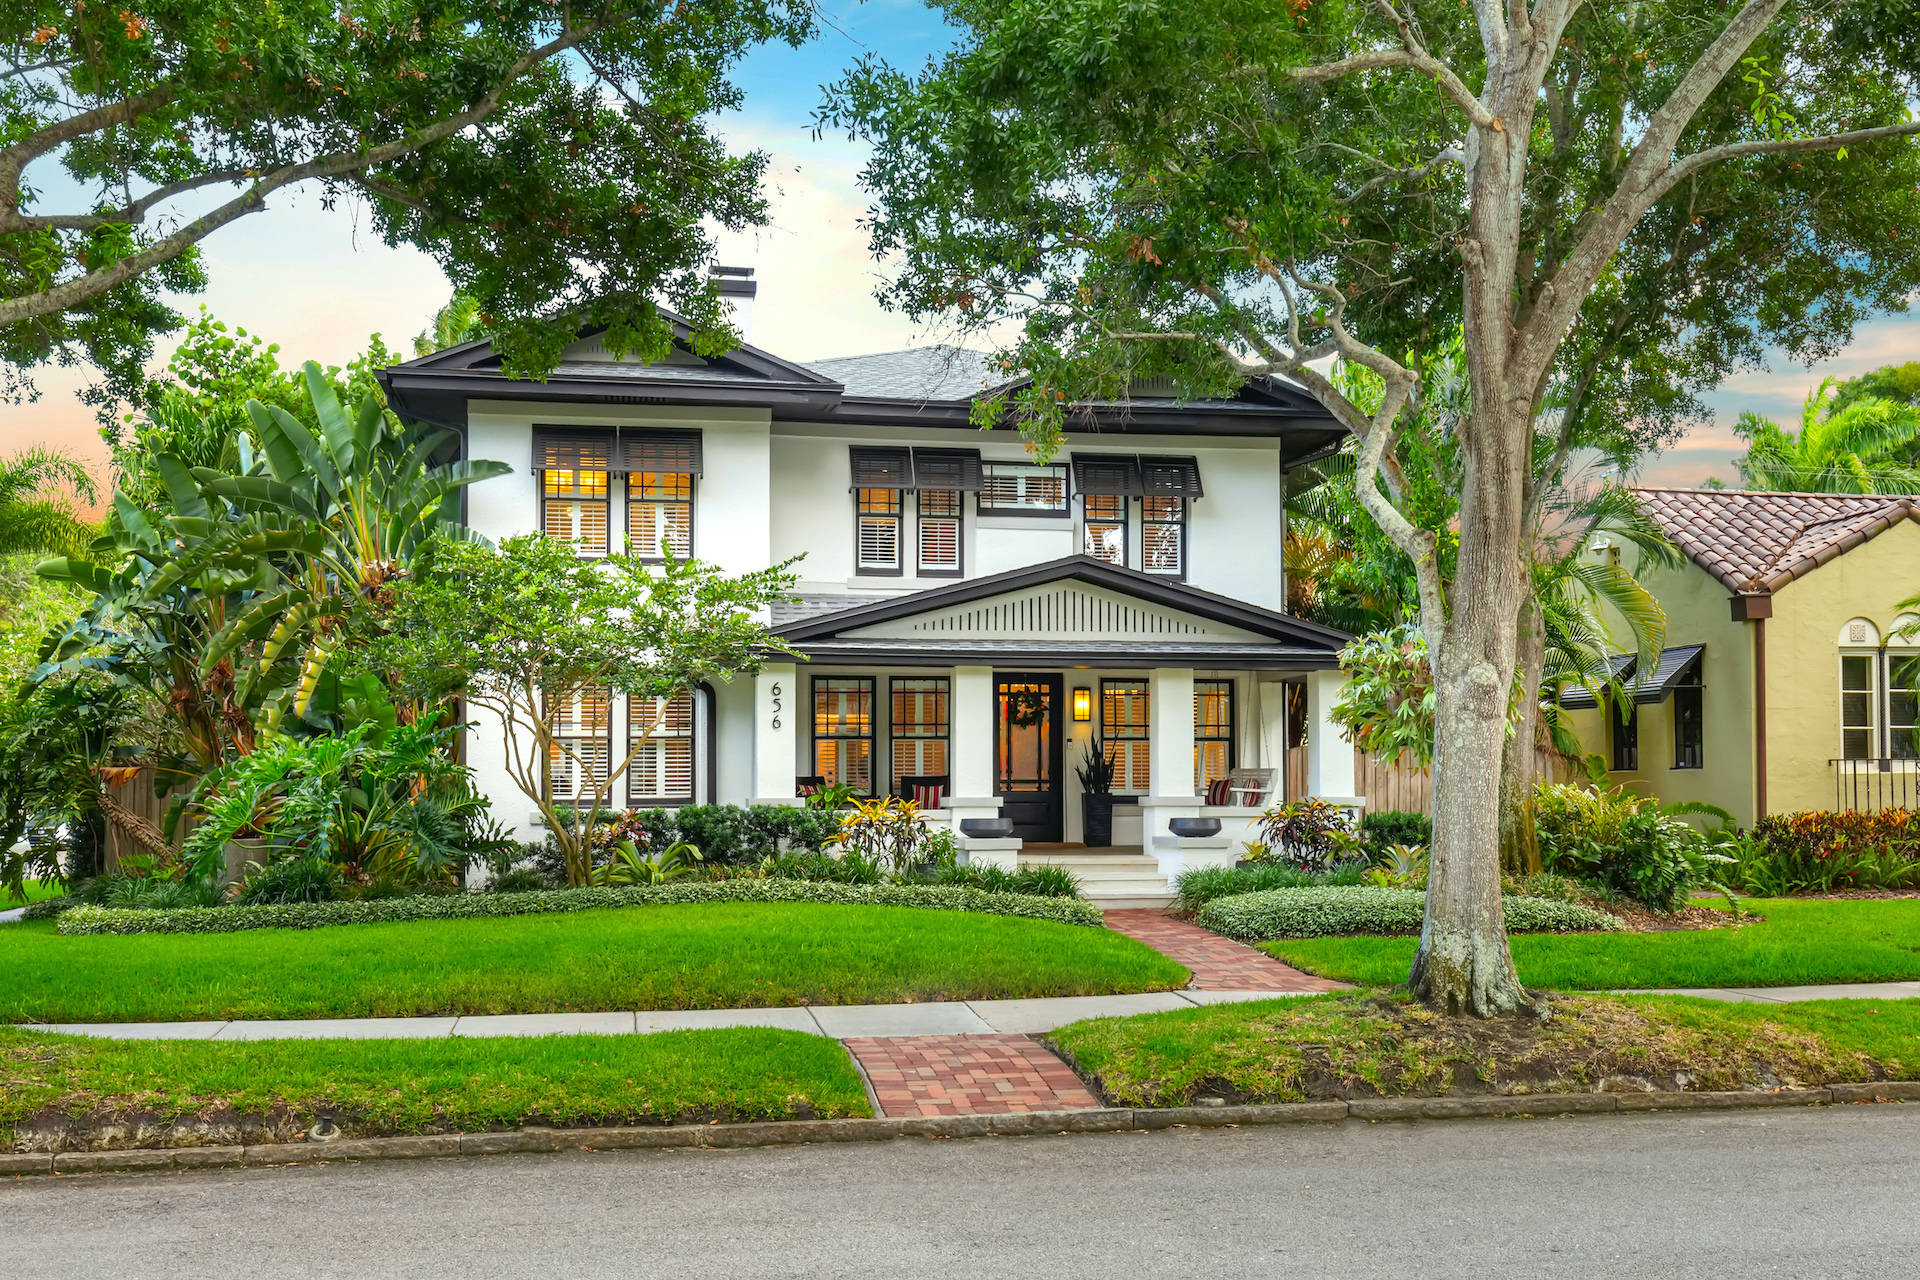 Bonnie Lanners | Smith & Associates Real Estate | REALTOR | Home